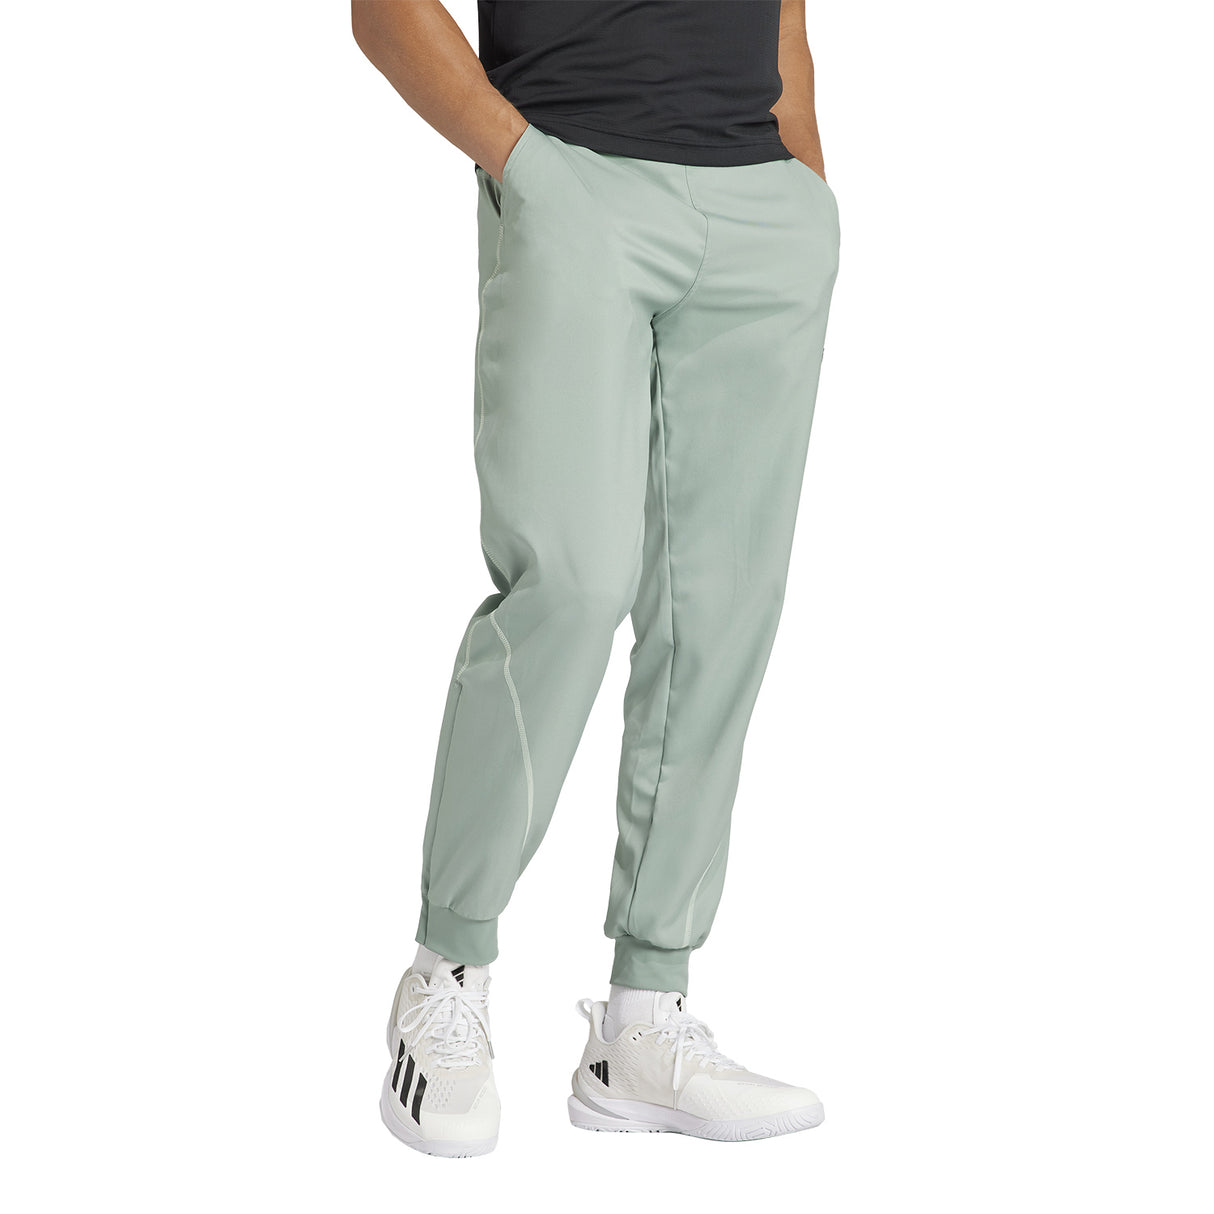 Adidas Melbourne Pro Pants (Mens) - Semi Green Spark